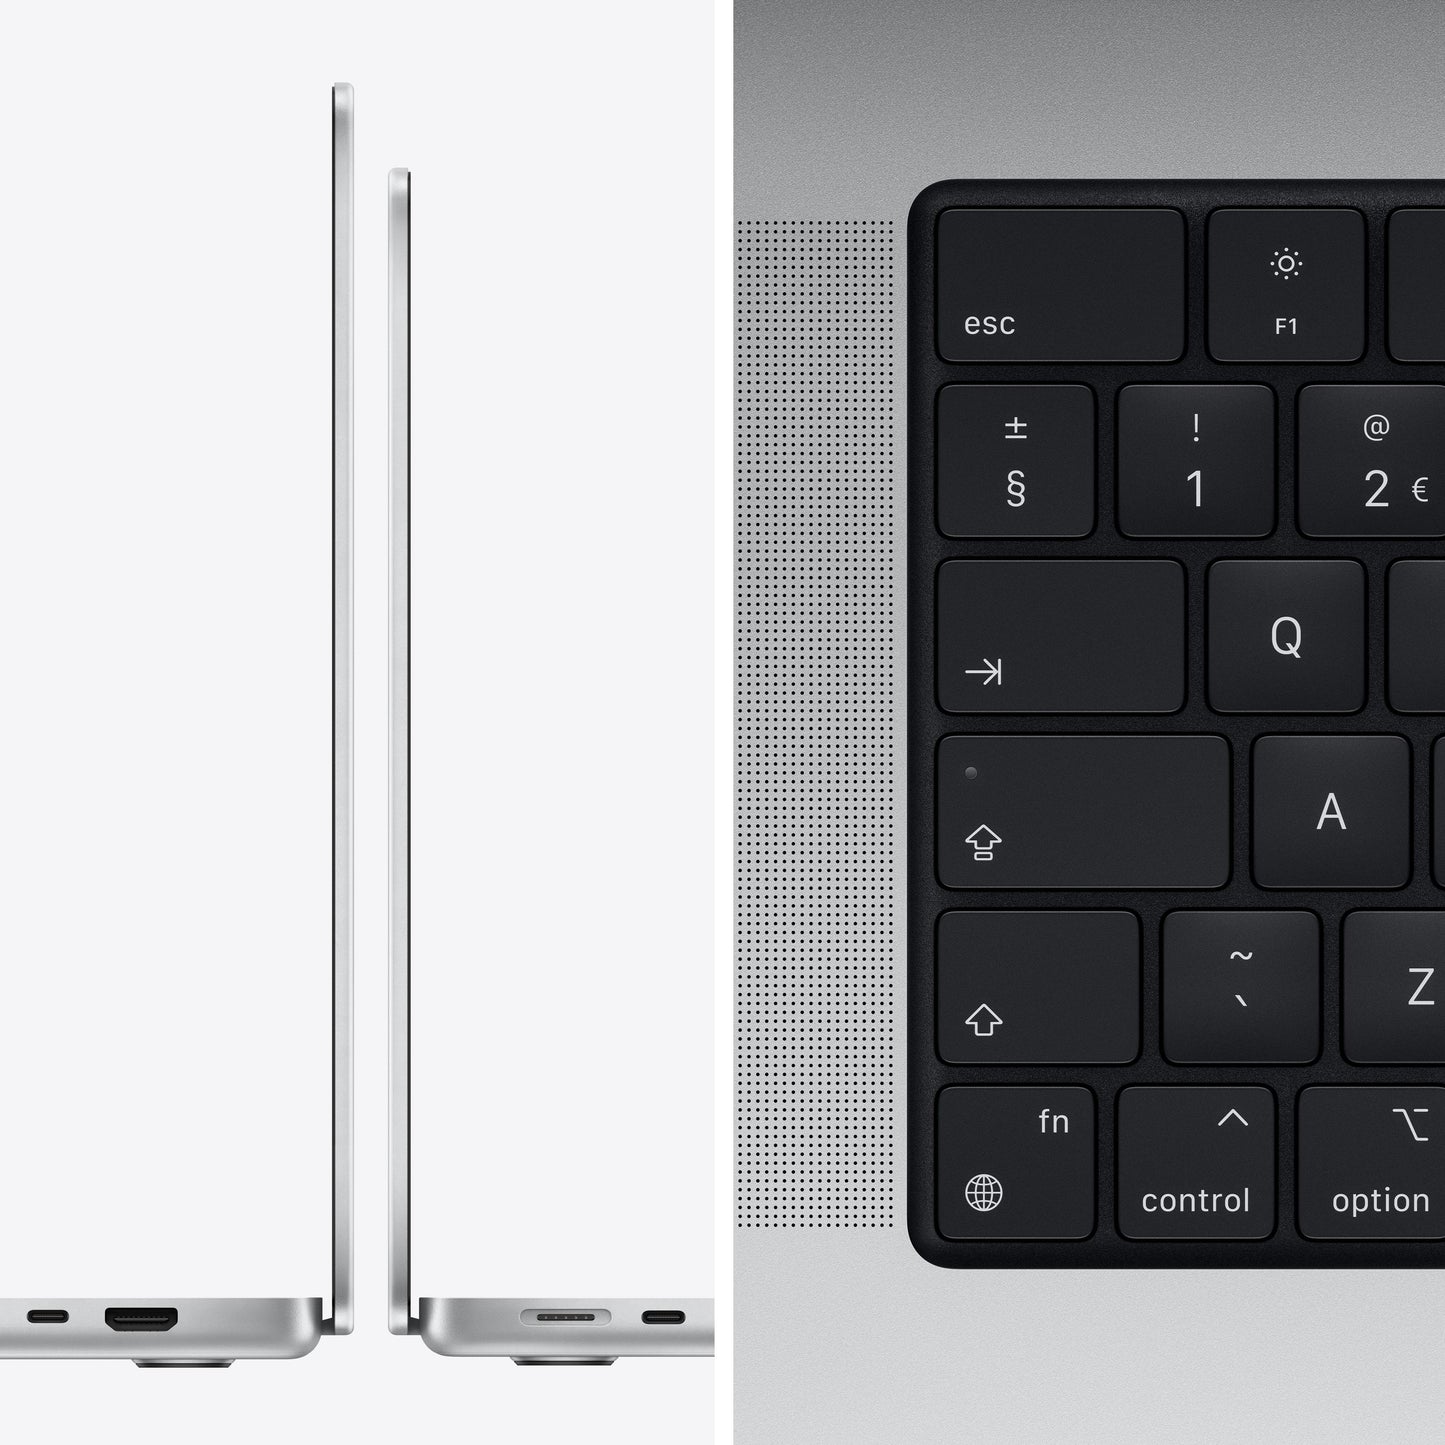 MacBook Pro مقاس 16 انش: شريحة Apple M1 Pro مع وحدة معالجة مركزية 10 نوى و 16 وحدة معالجة رسومات أساسية، 512 جيجابايت SSD - فضي